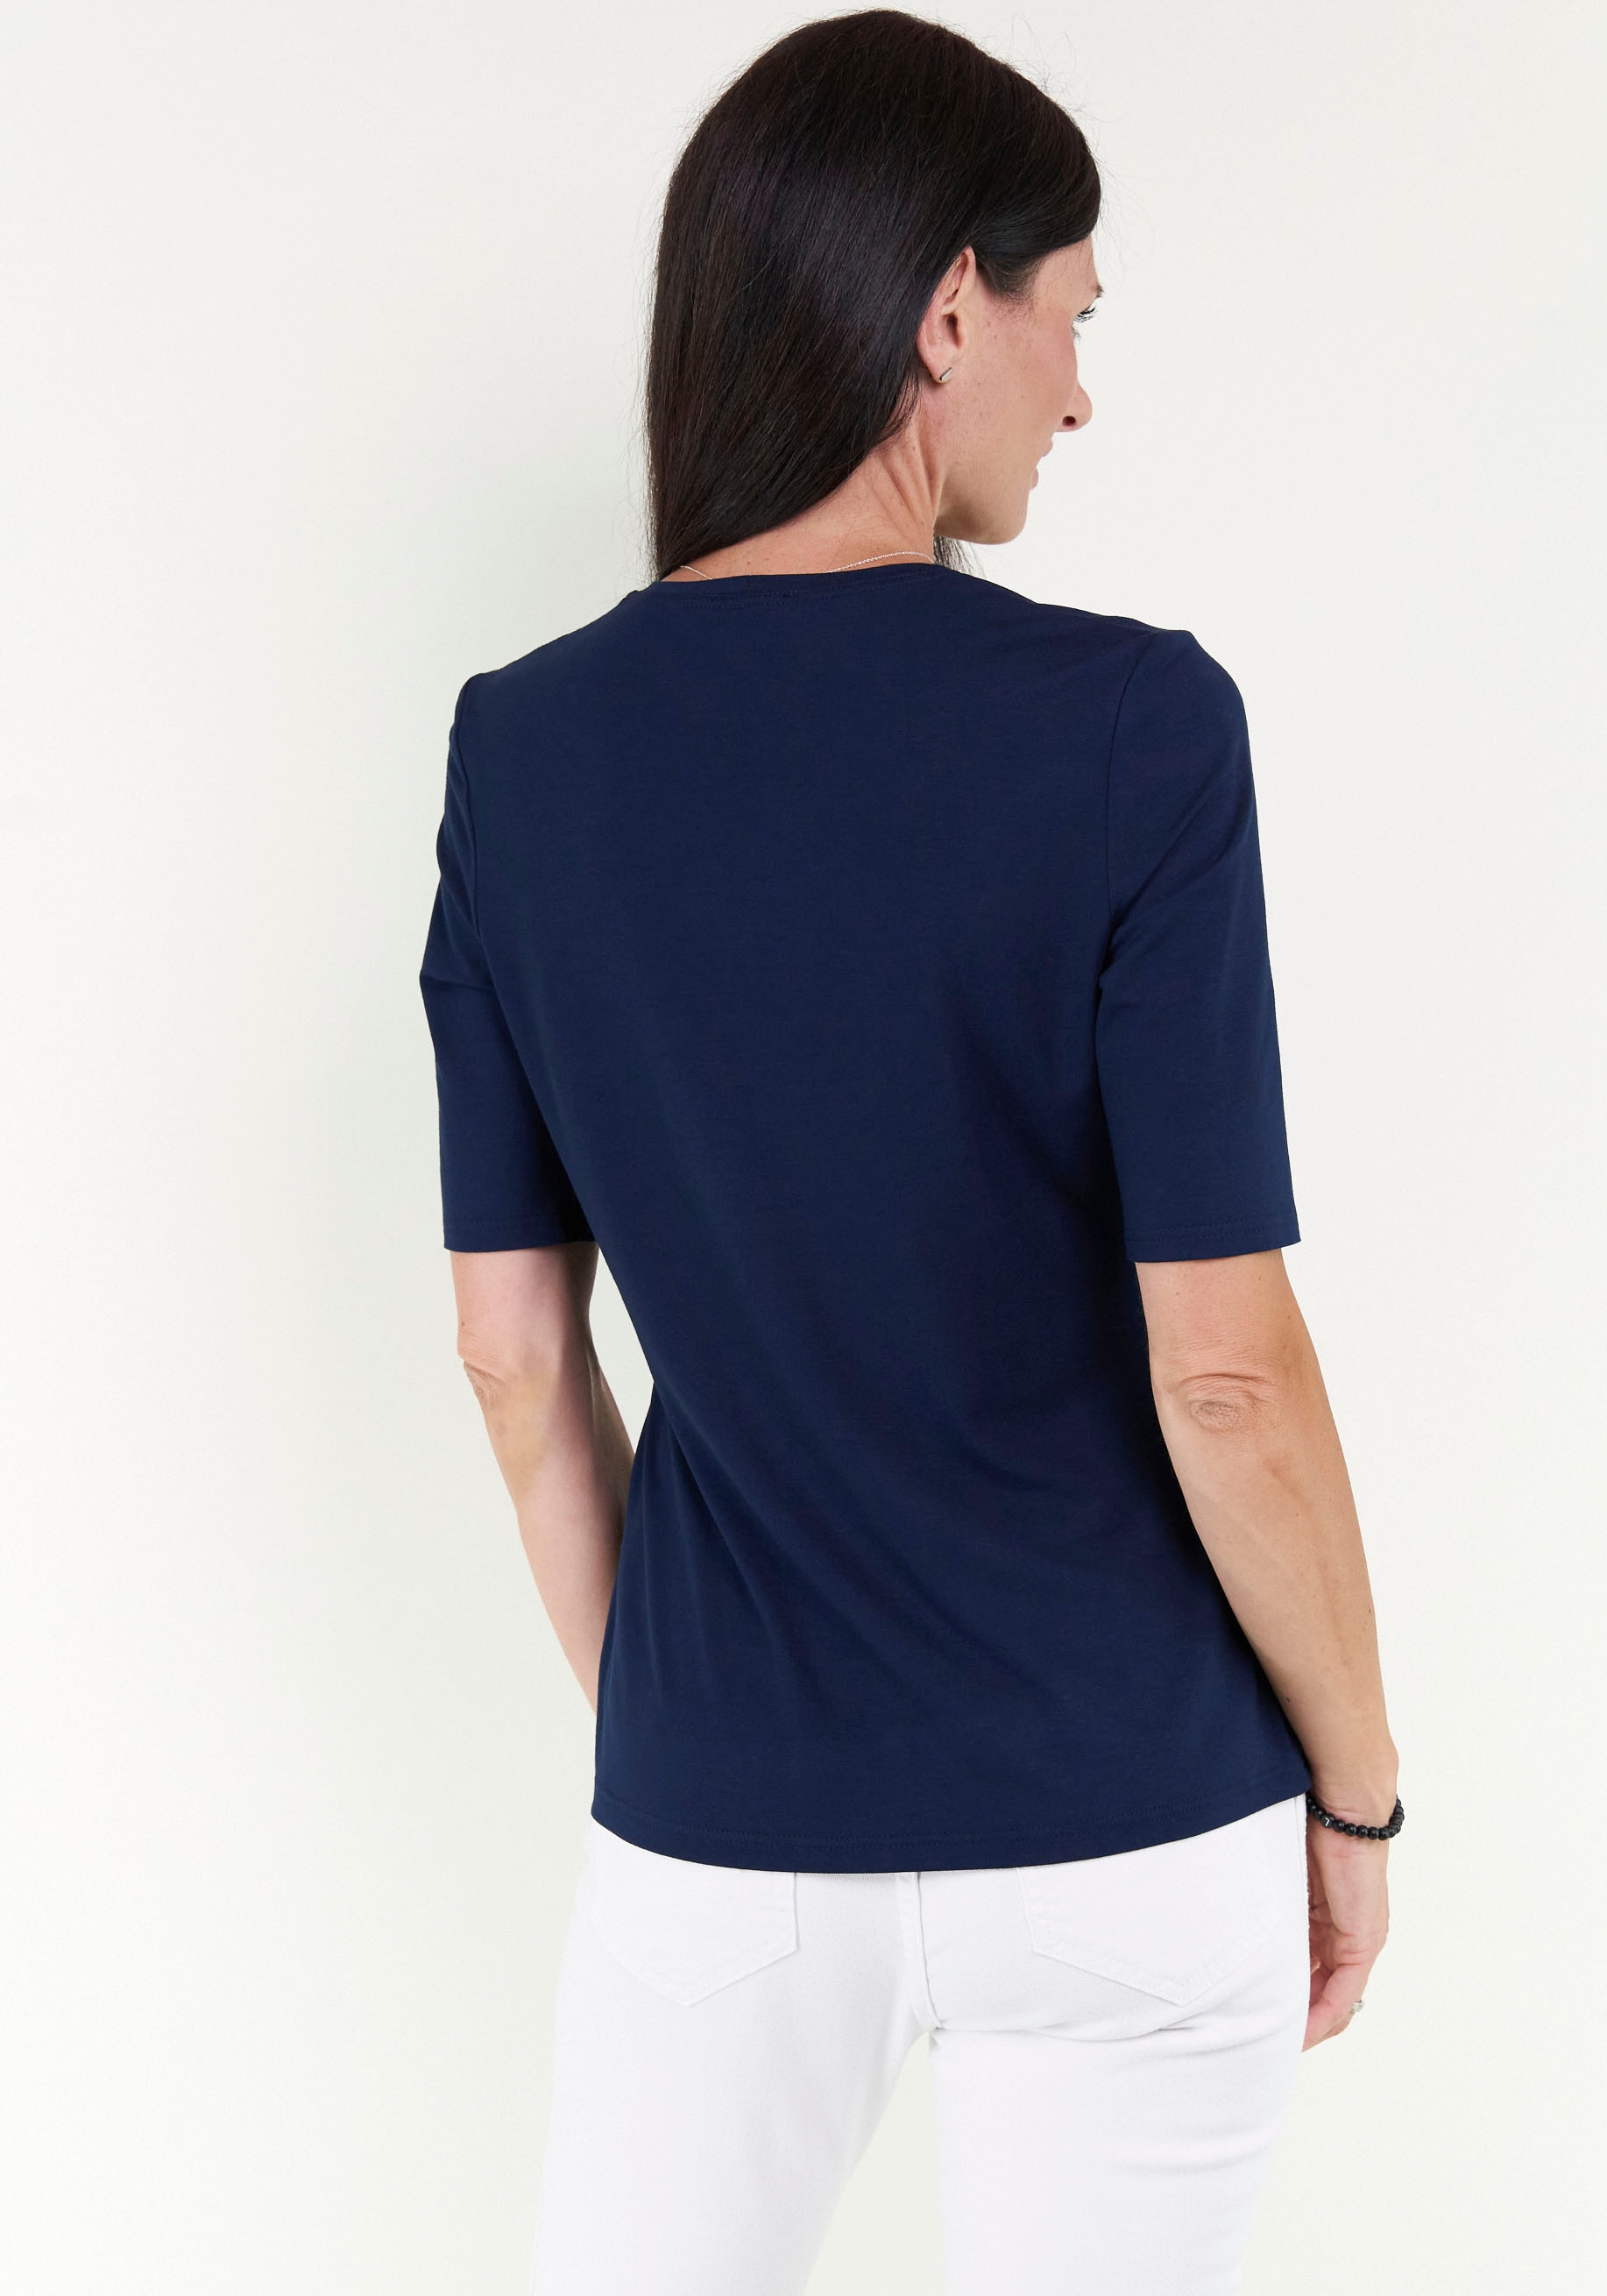 Seidel Moden V-Shirt, mit Halbarm aus softem Material, MADE IN GERMANY für  kaufen | BAUR | V-Shirts